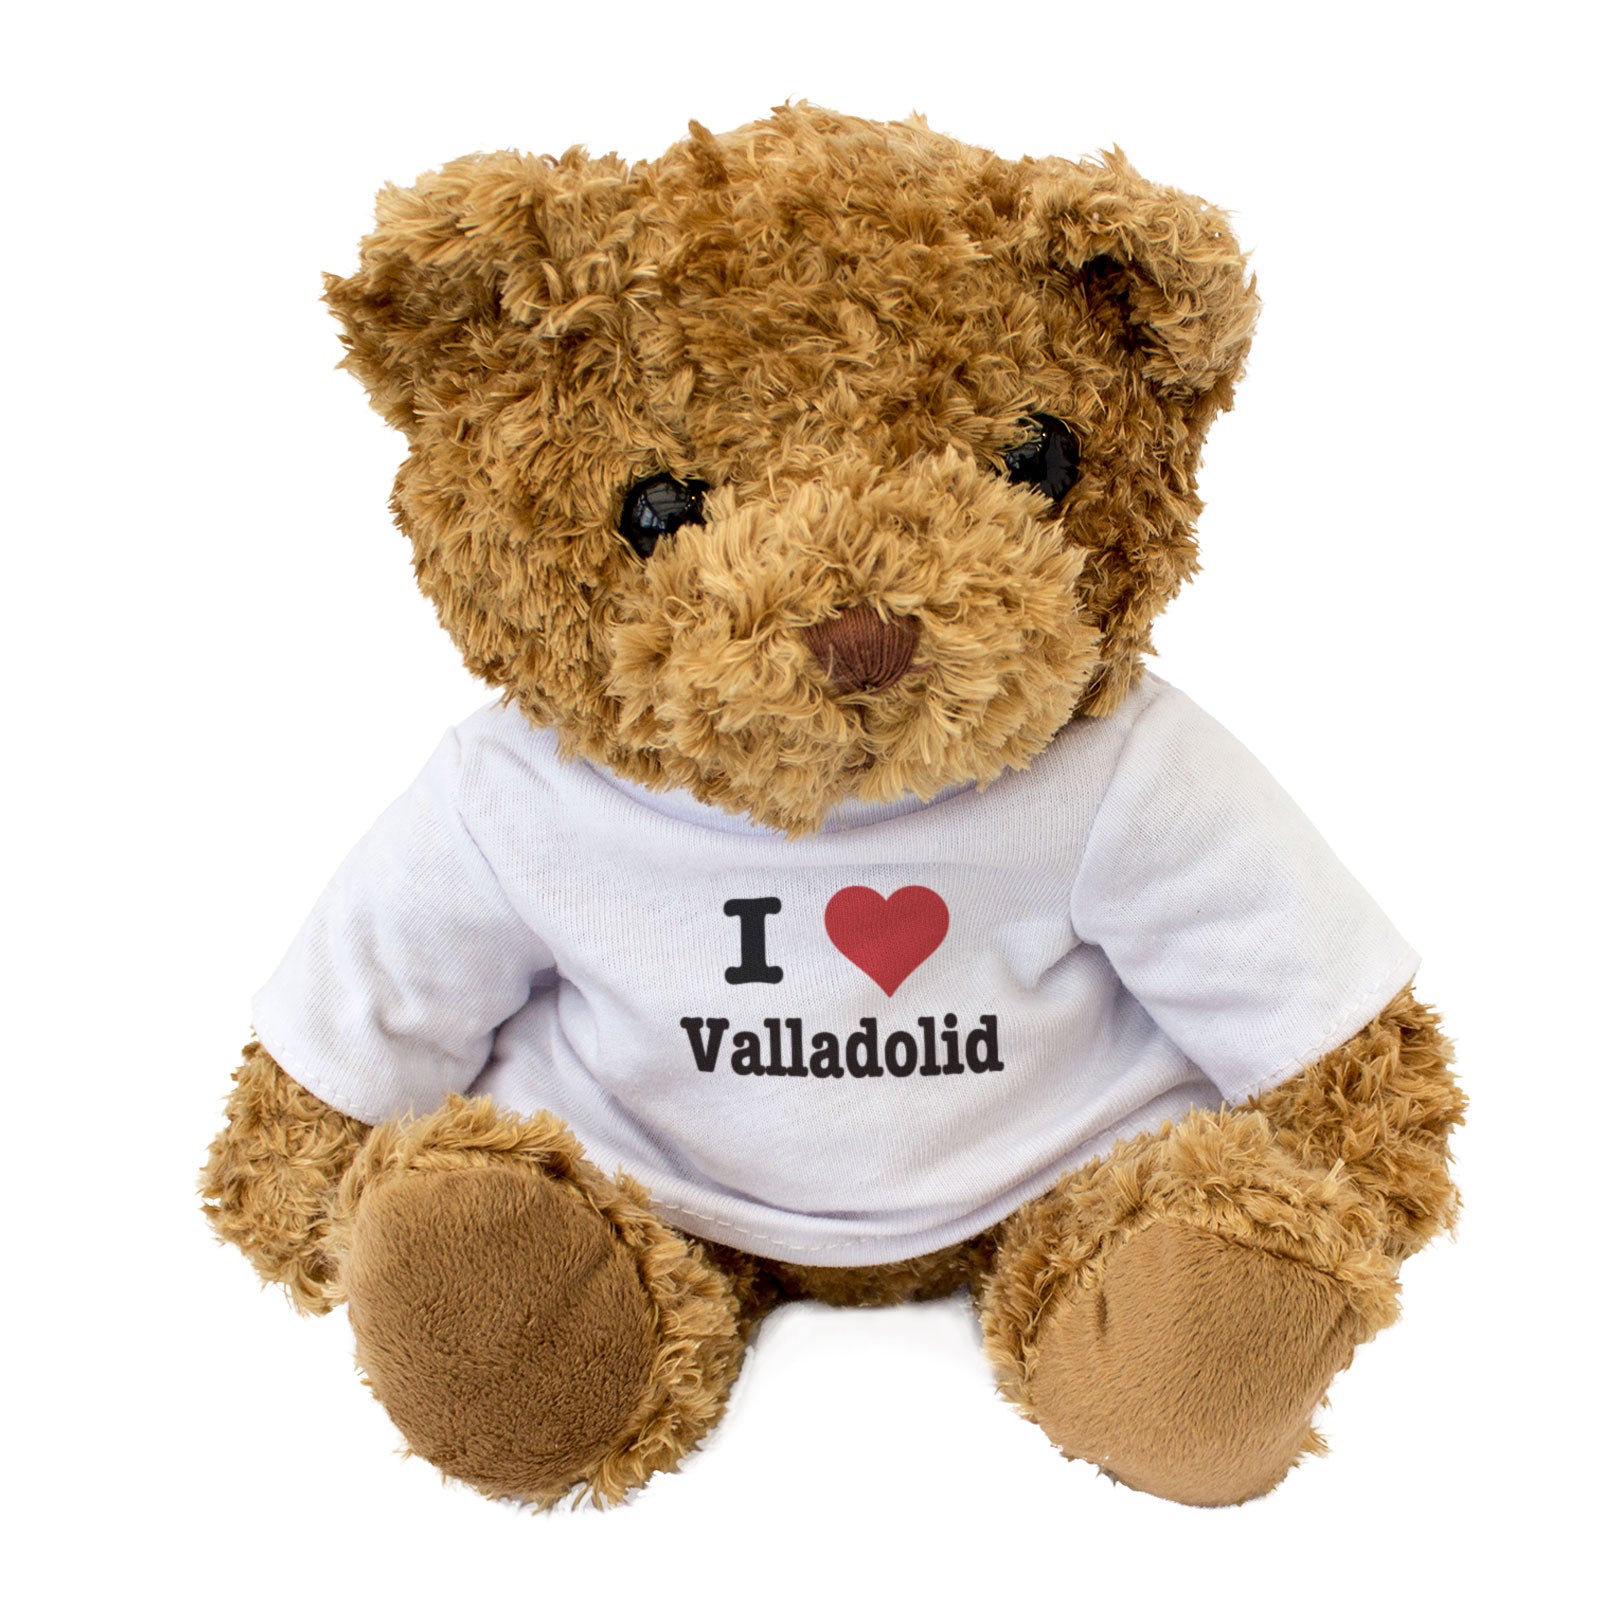 I Love Valladolid - Teddy Bear